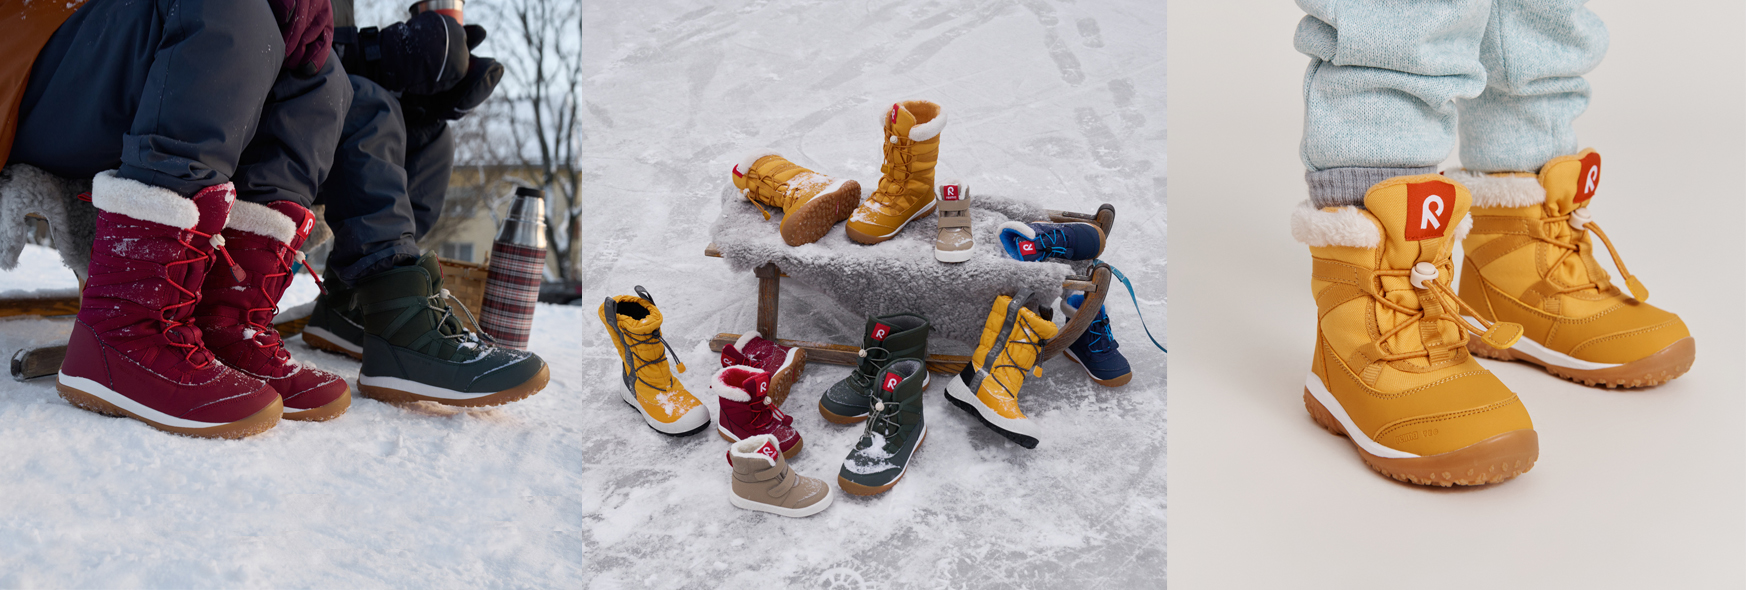 Детские зимние ботинки и сапоги